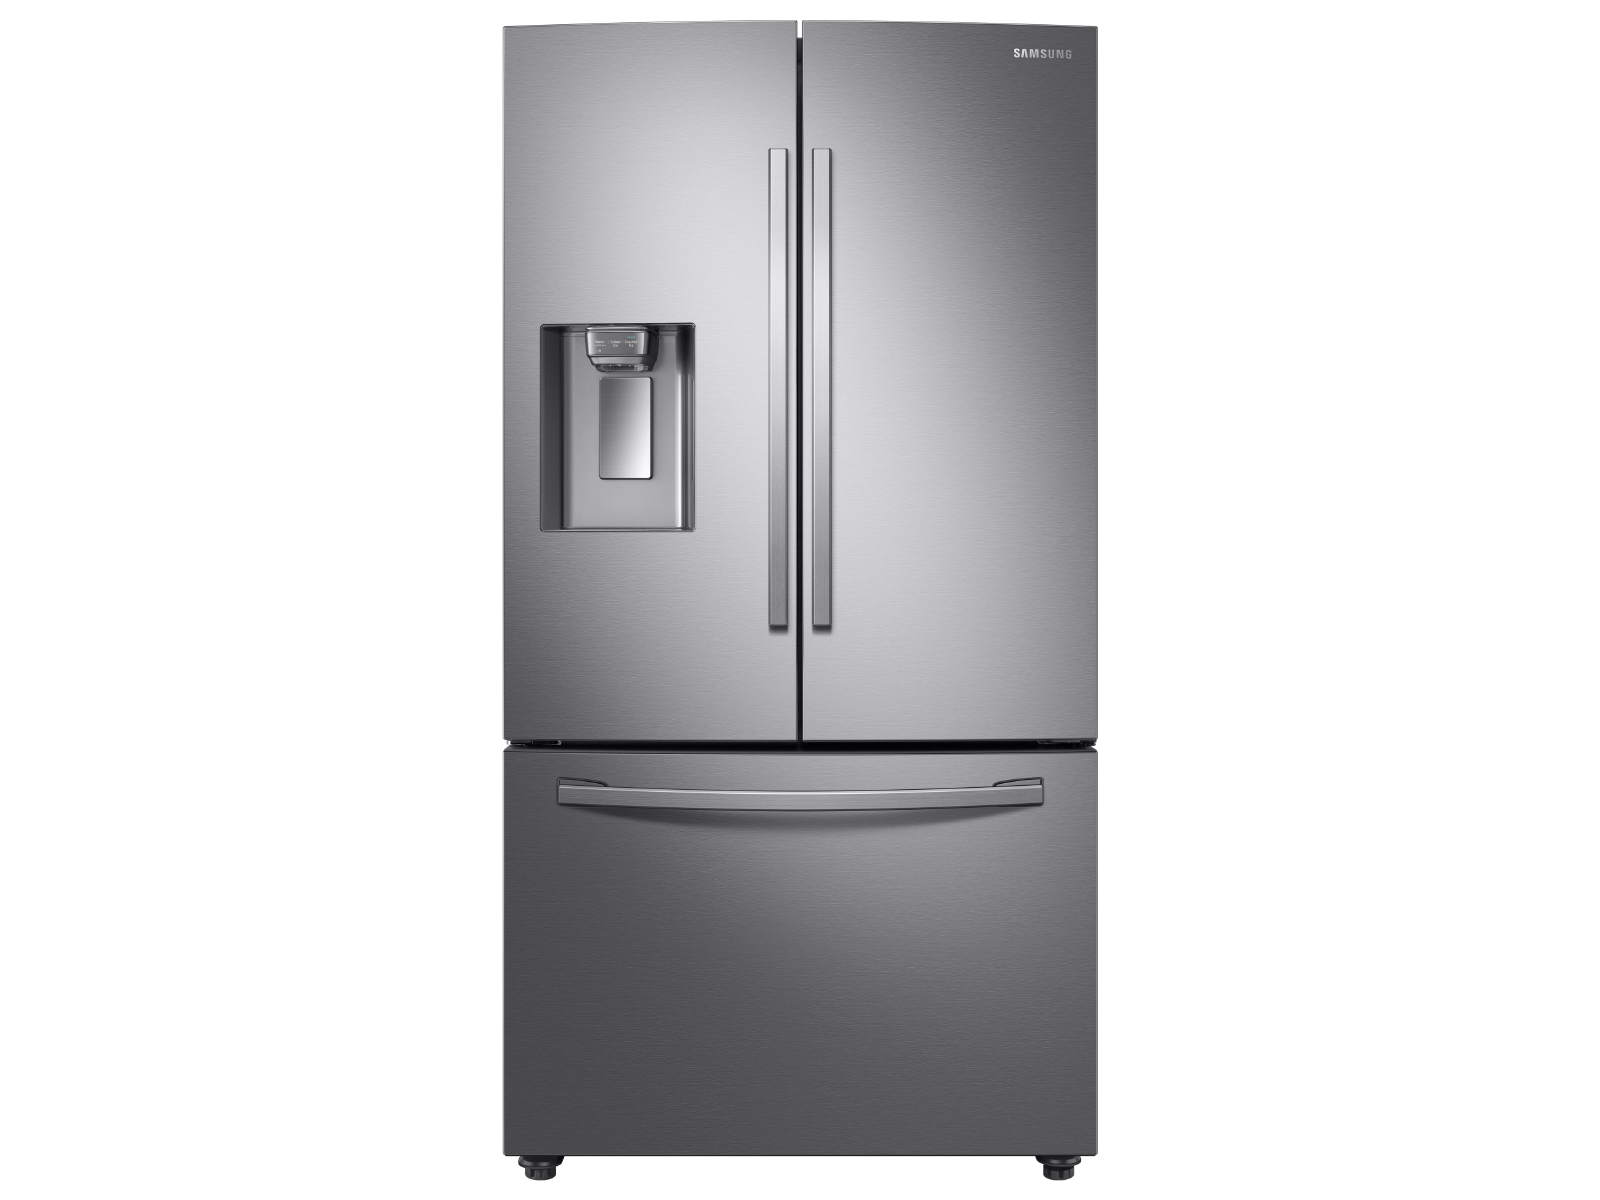 Unique Bargains Oven Refrigerator Metal Freezer Door Flush Mounted Walk in Latch Handle - Silver Tone